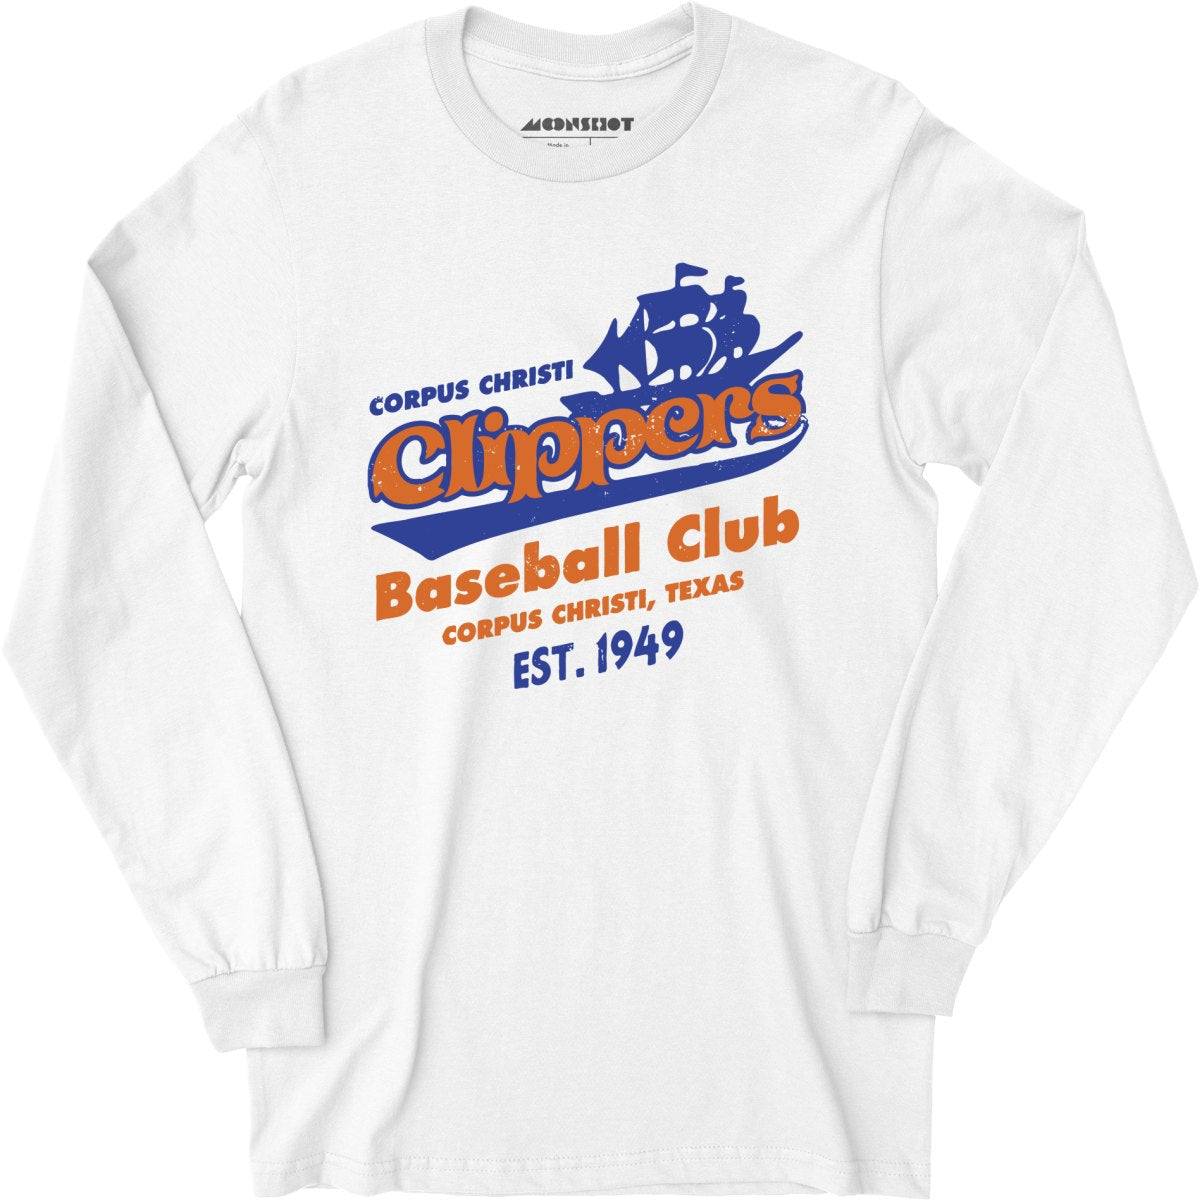 Corpus Christi Clippers - Texas - Vintage Defunct Baseball Teams - Long Sleeve T-Shirt